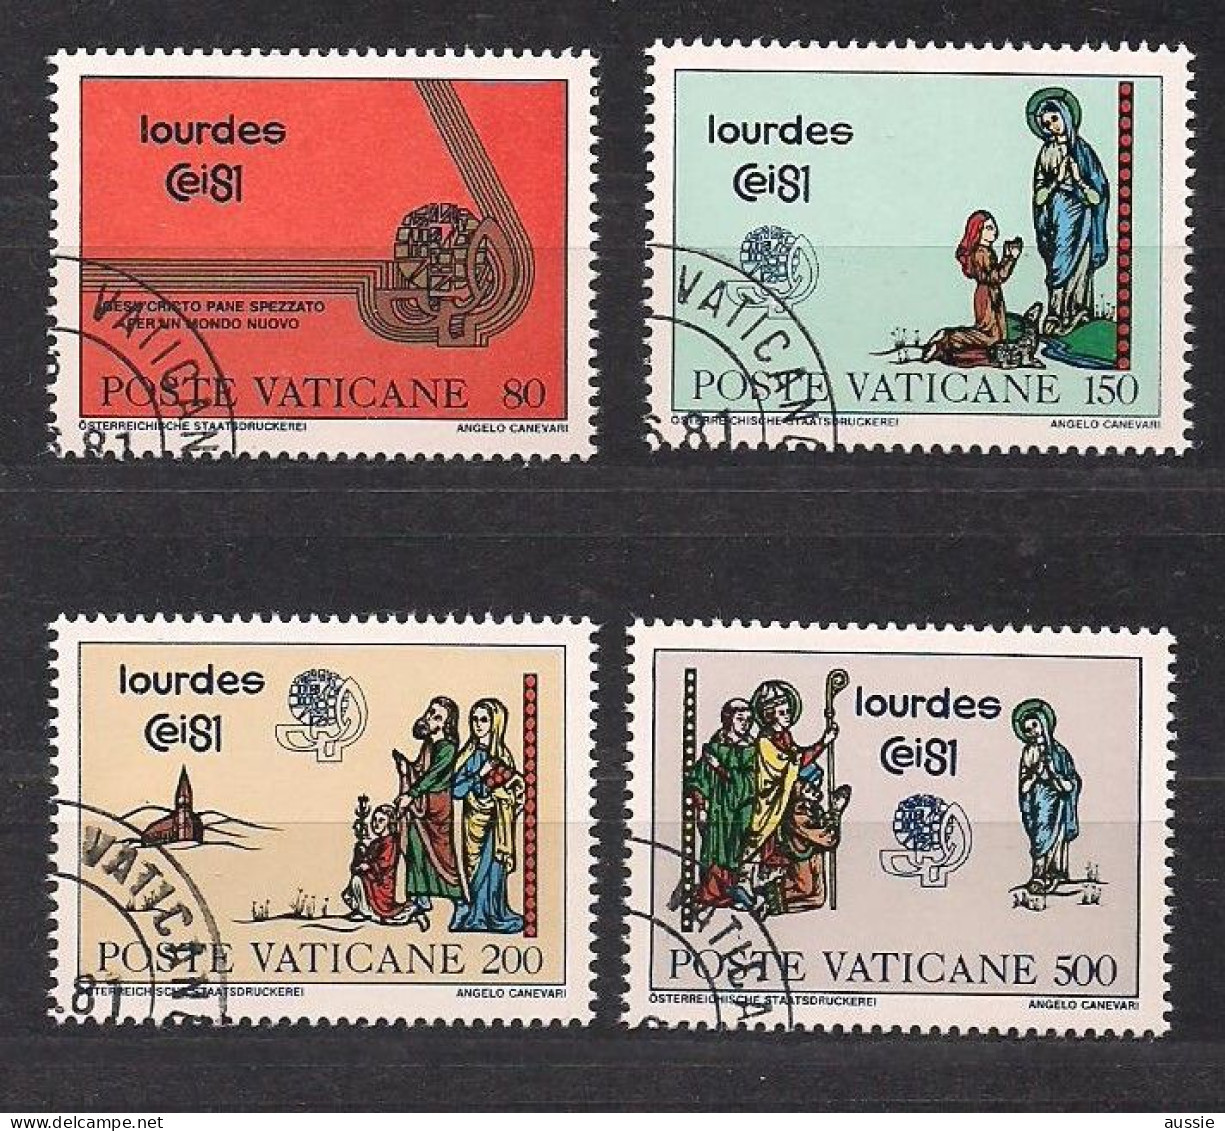 Vatikaan Vatican 1981 Yvertnr. 708-711 (o) Oblitéré  Cote 1,75 € - Used Stamps